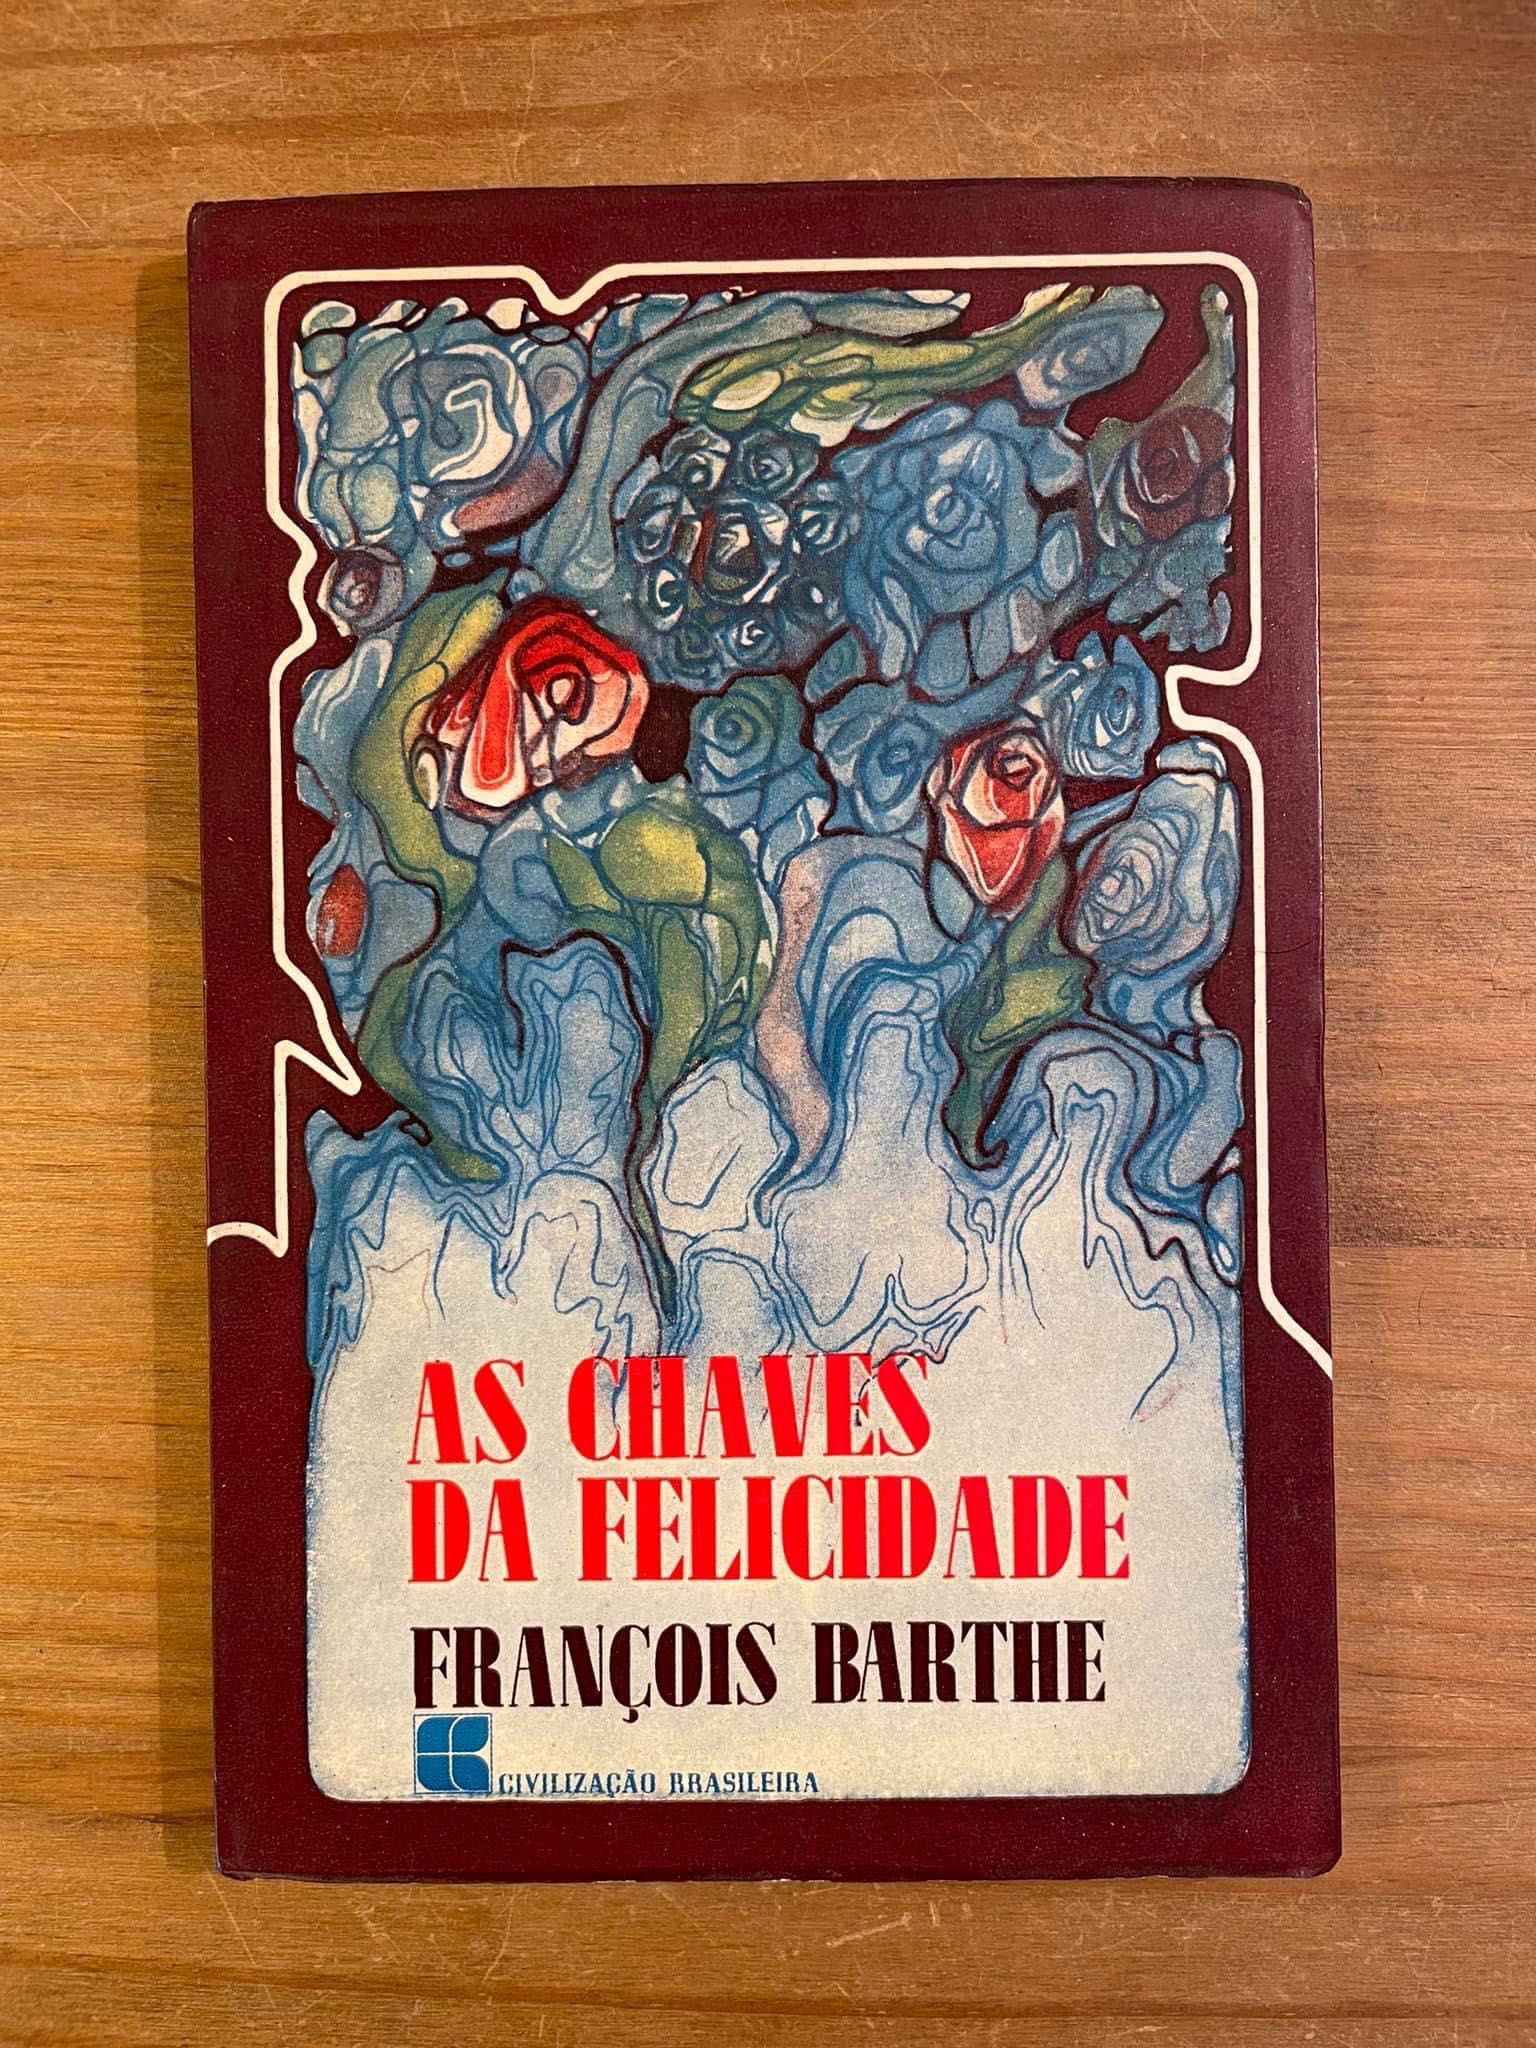 As Chaves da Felicidade - François Barthe (portes grátis)